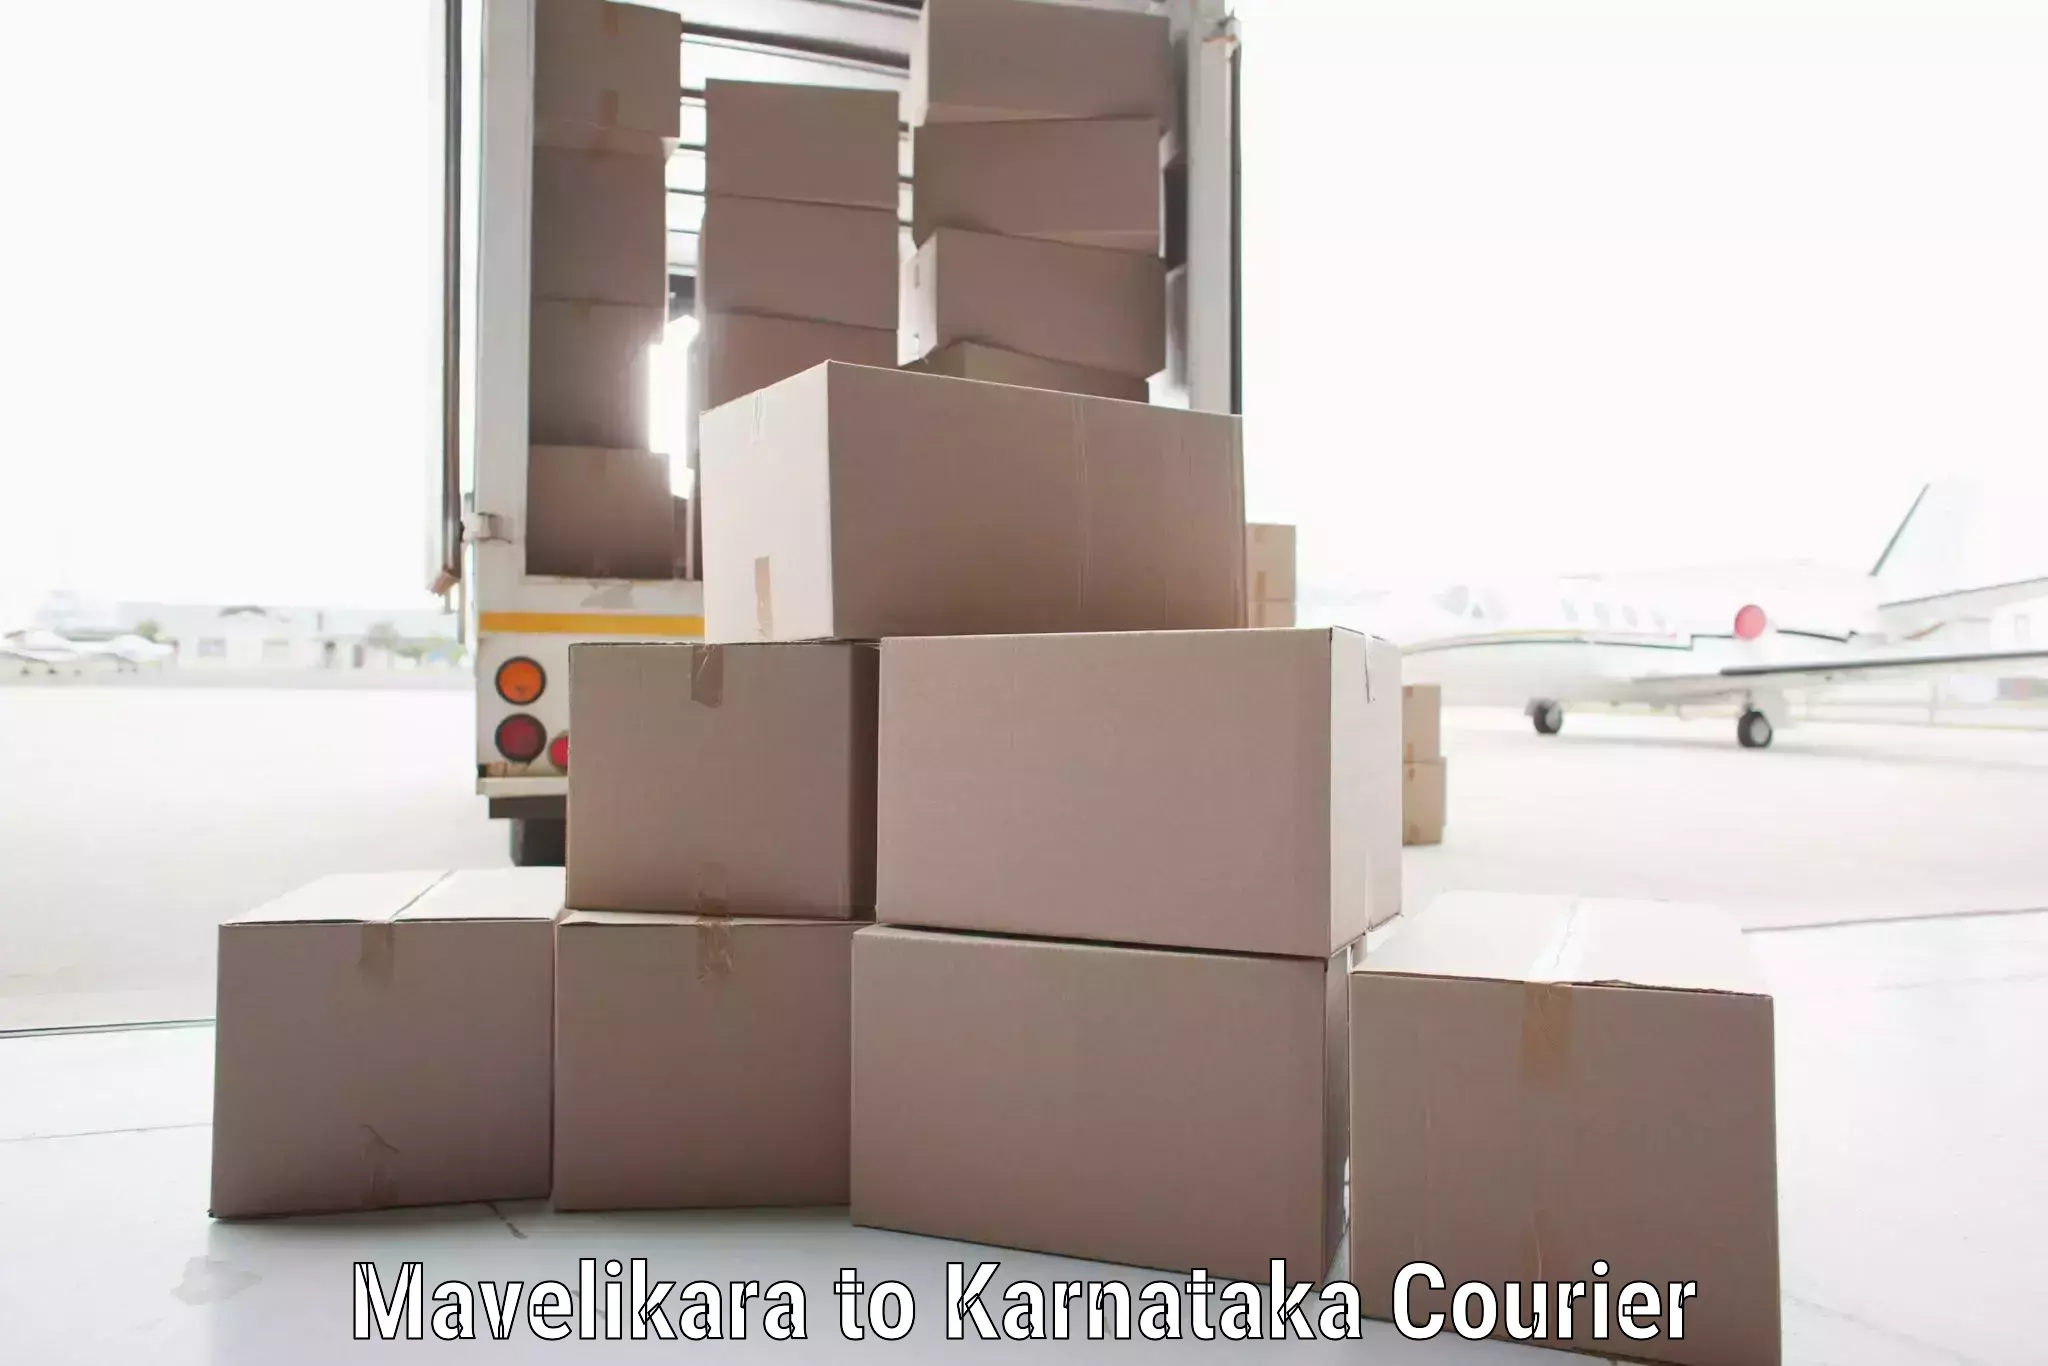 Advanced shipping technology Mavelikara to Karnataka